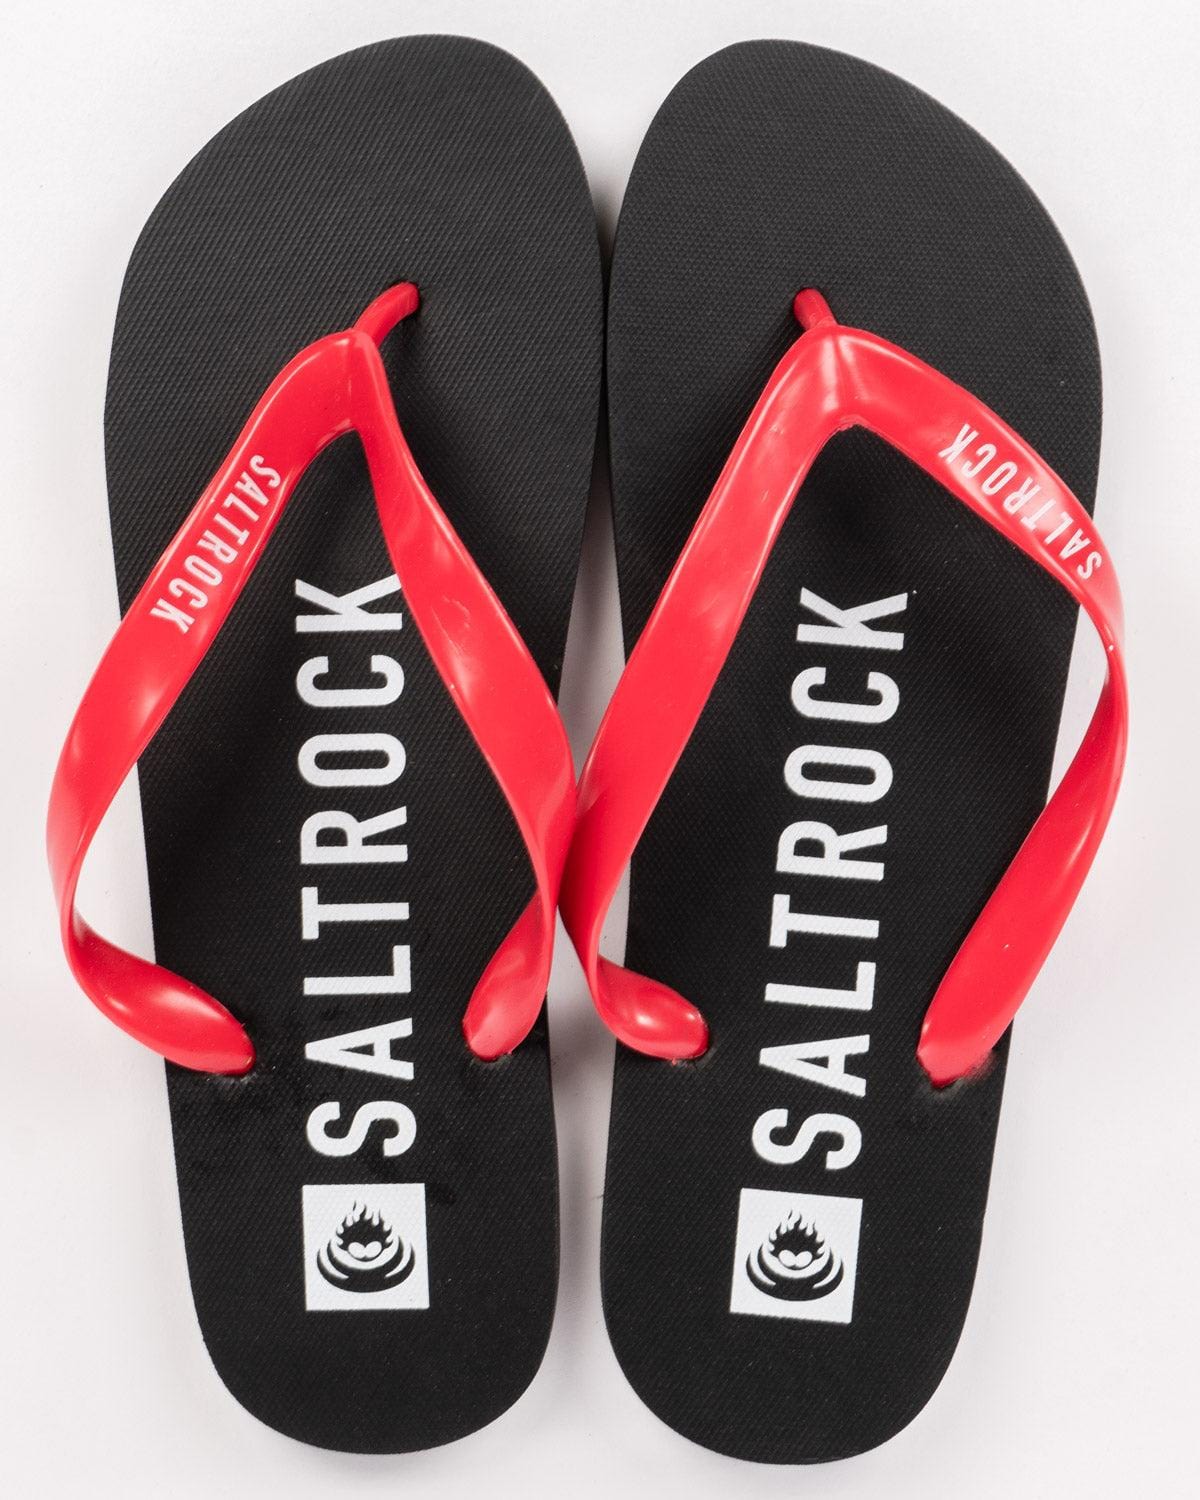 Corp - Unisex Flip Flops - Black - Saltrock Surfwear